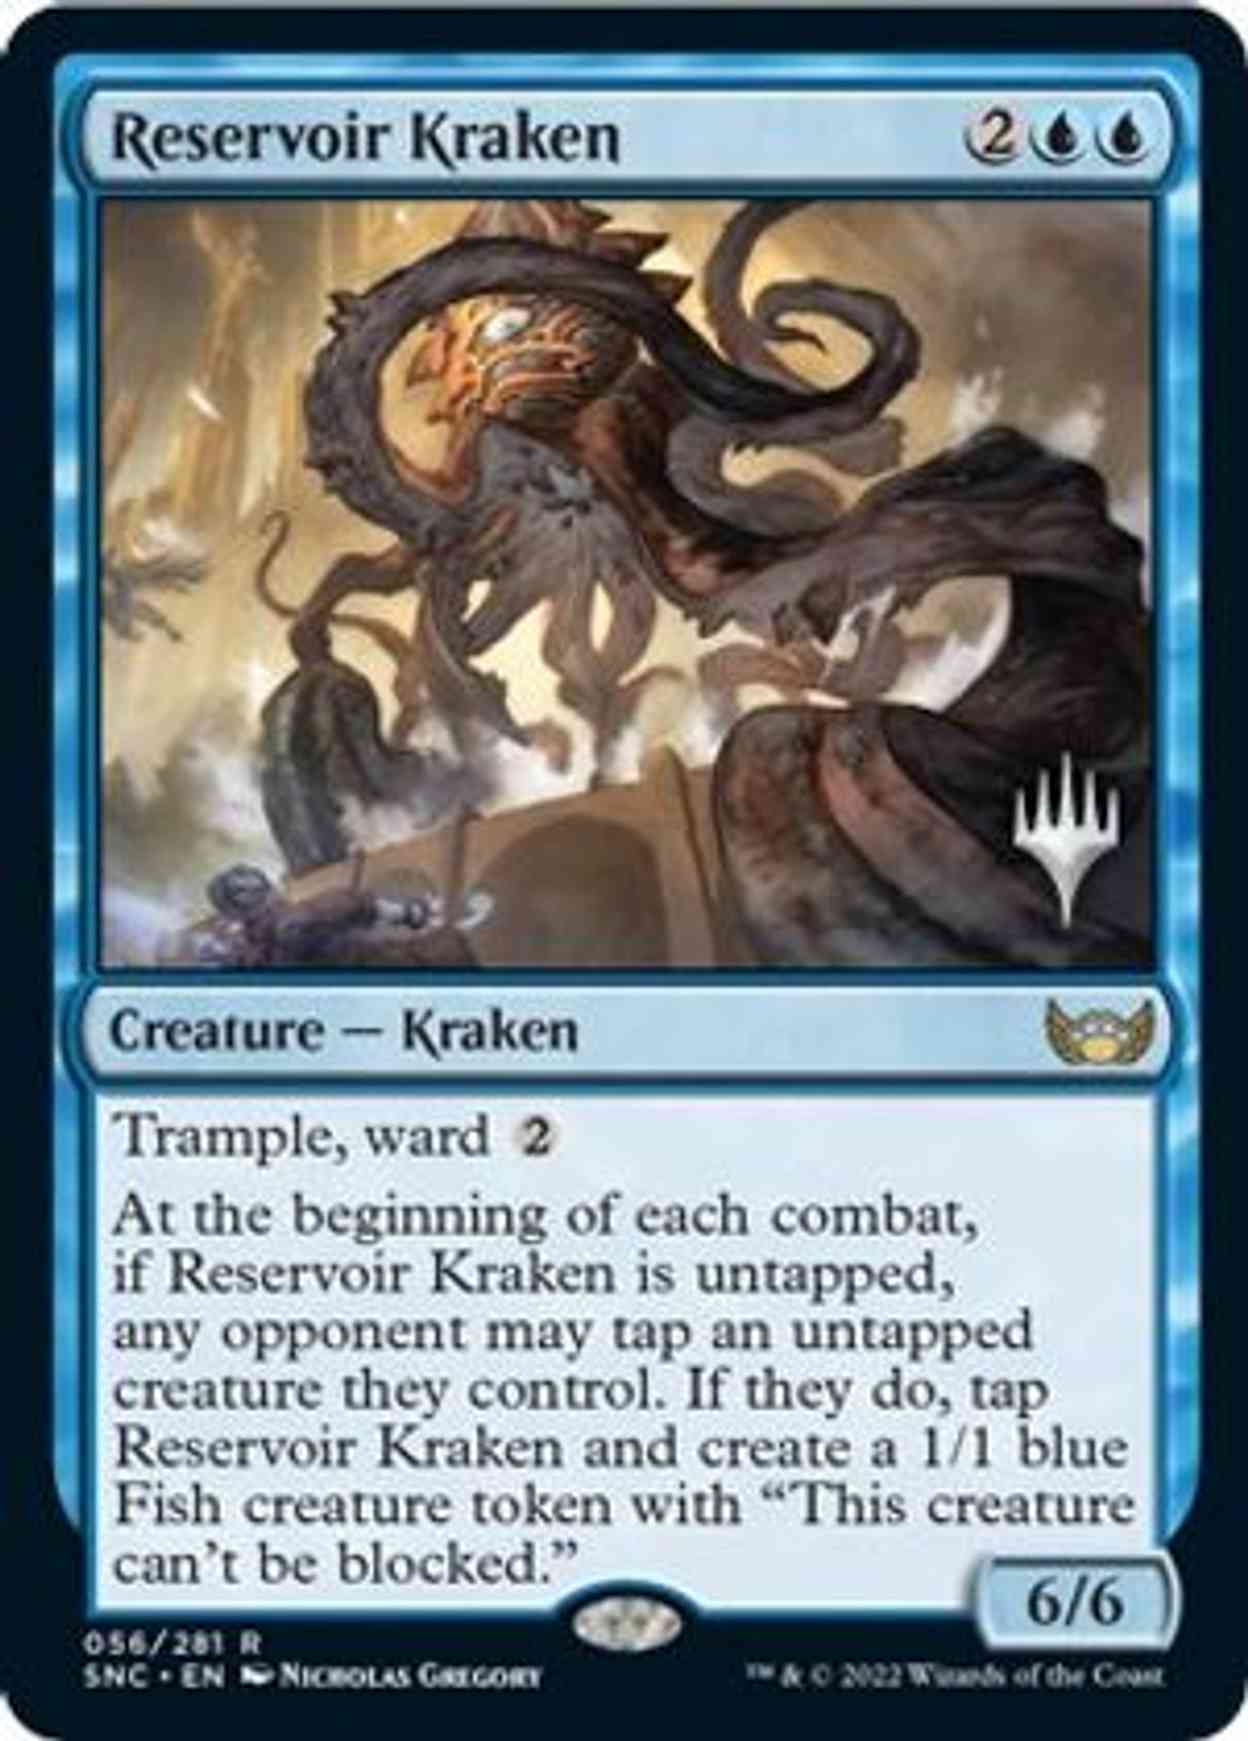 Reservoir Kraken magic card front